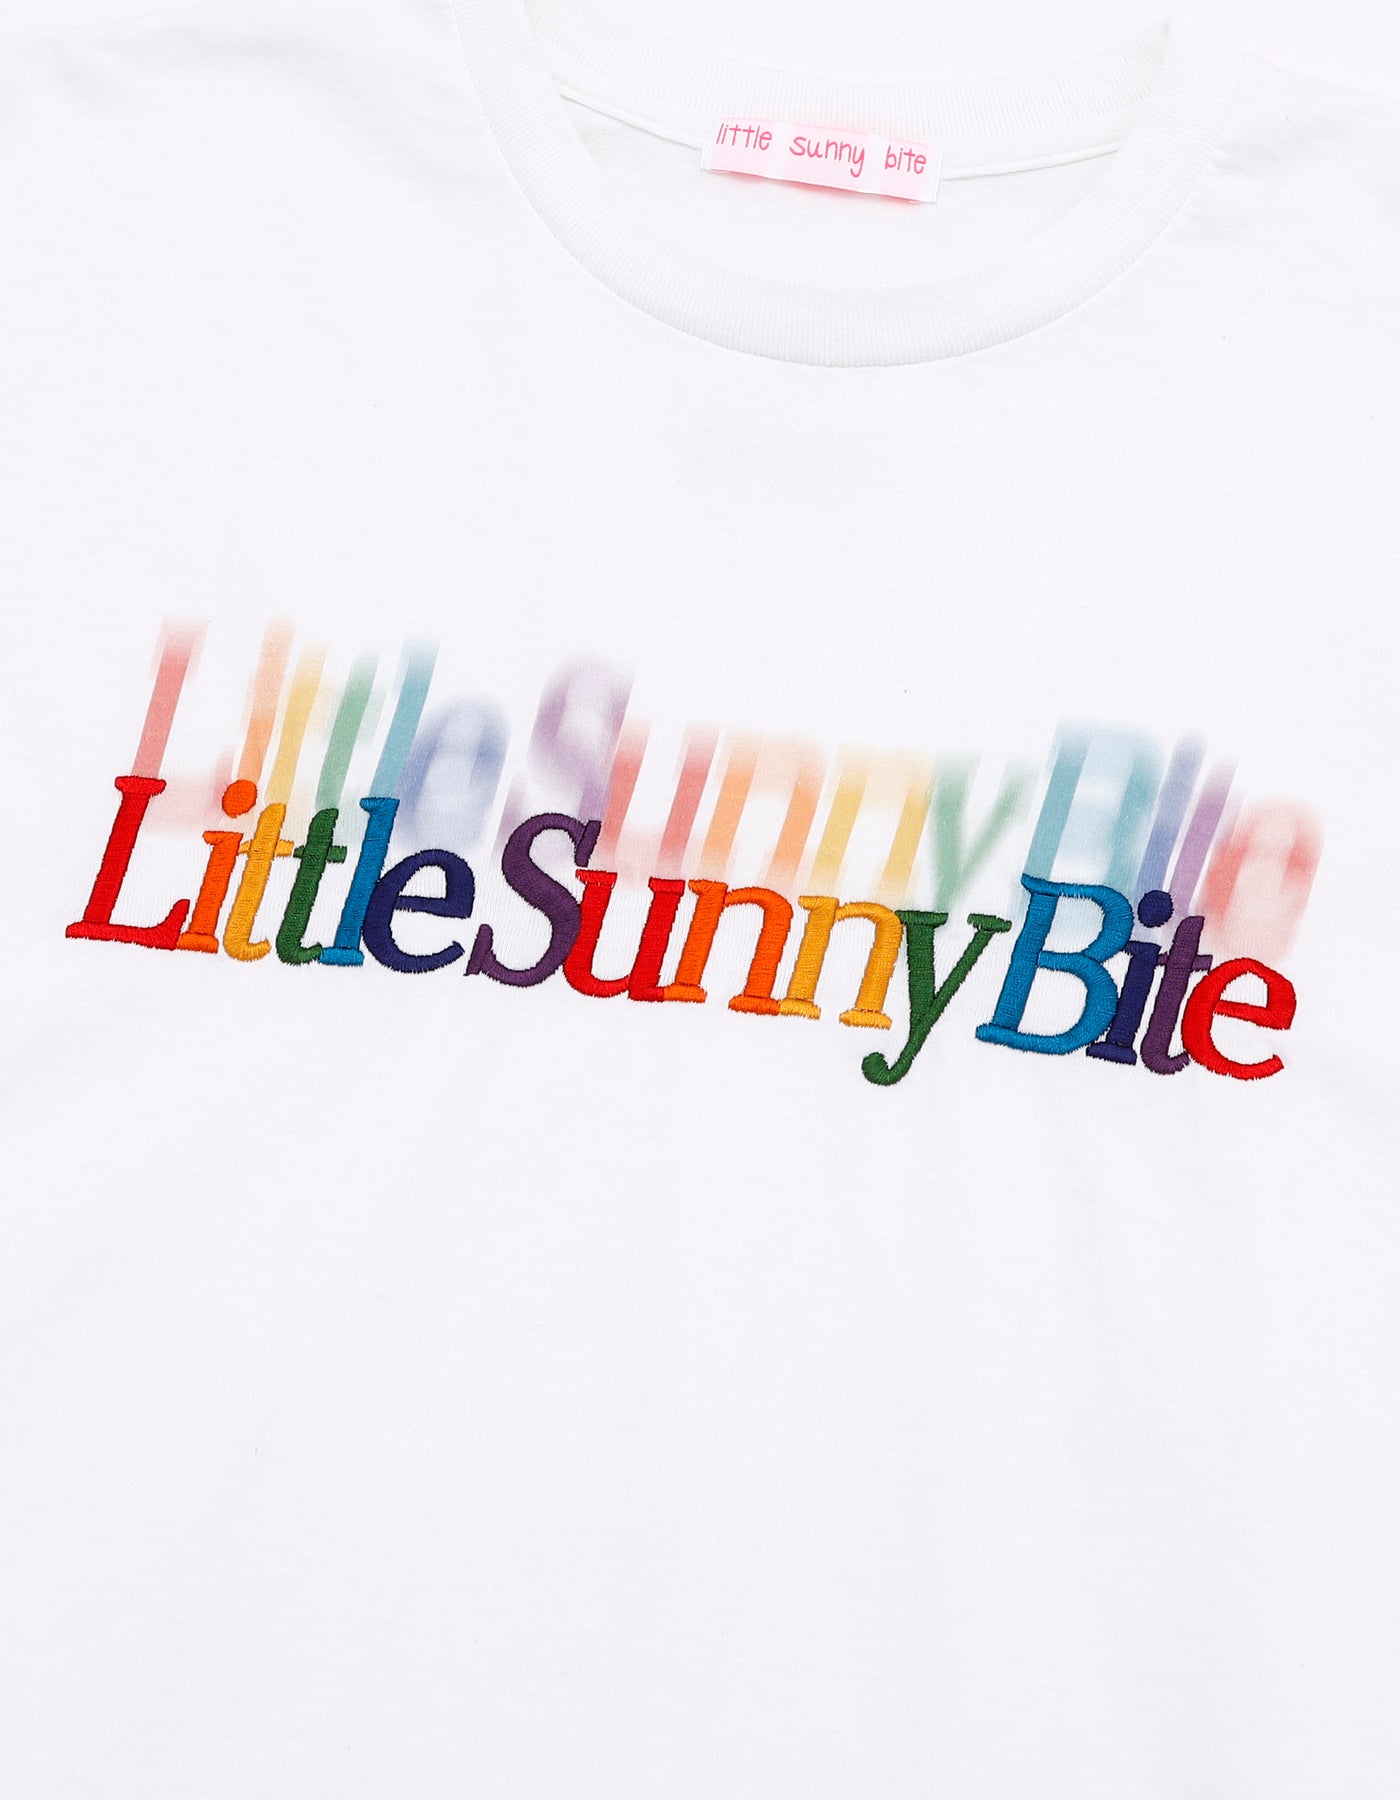 little sunny bite Stitch big tee / WHITE